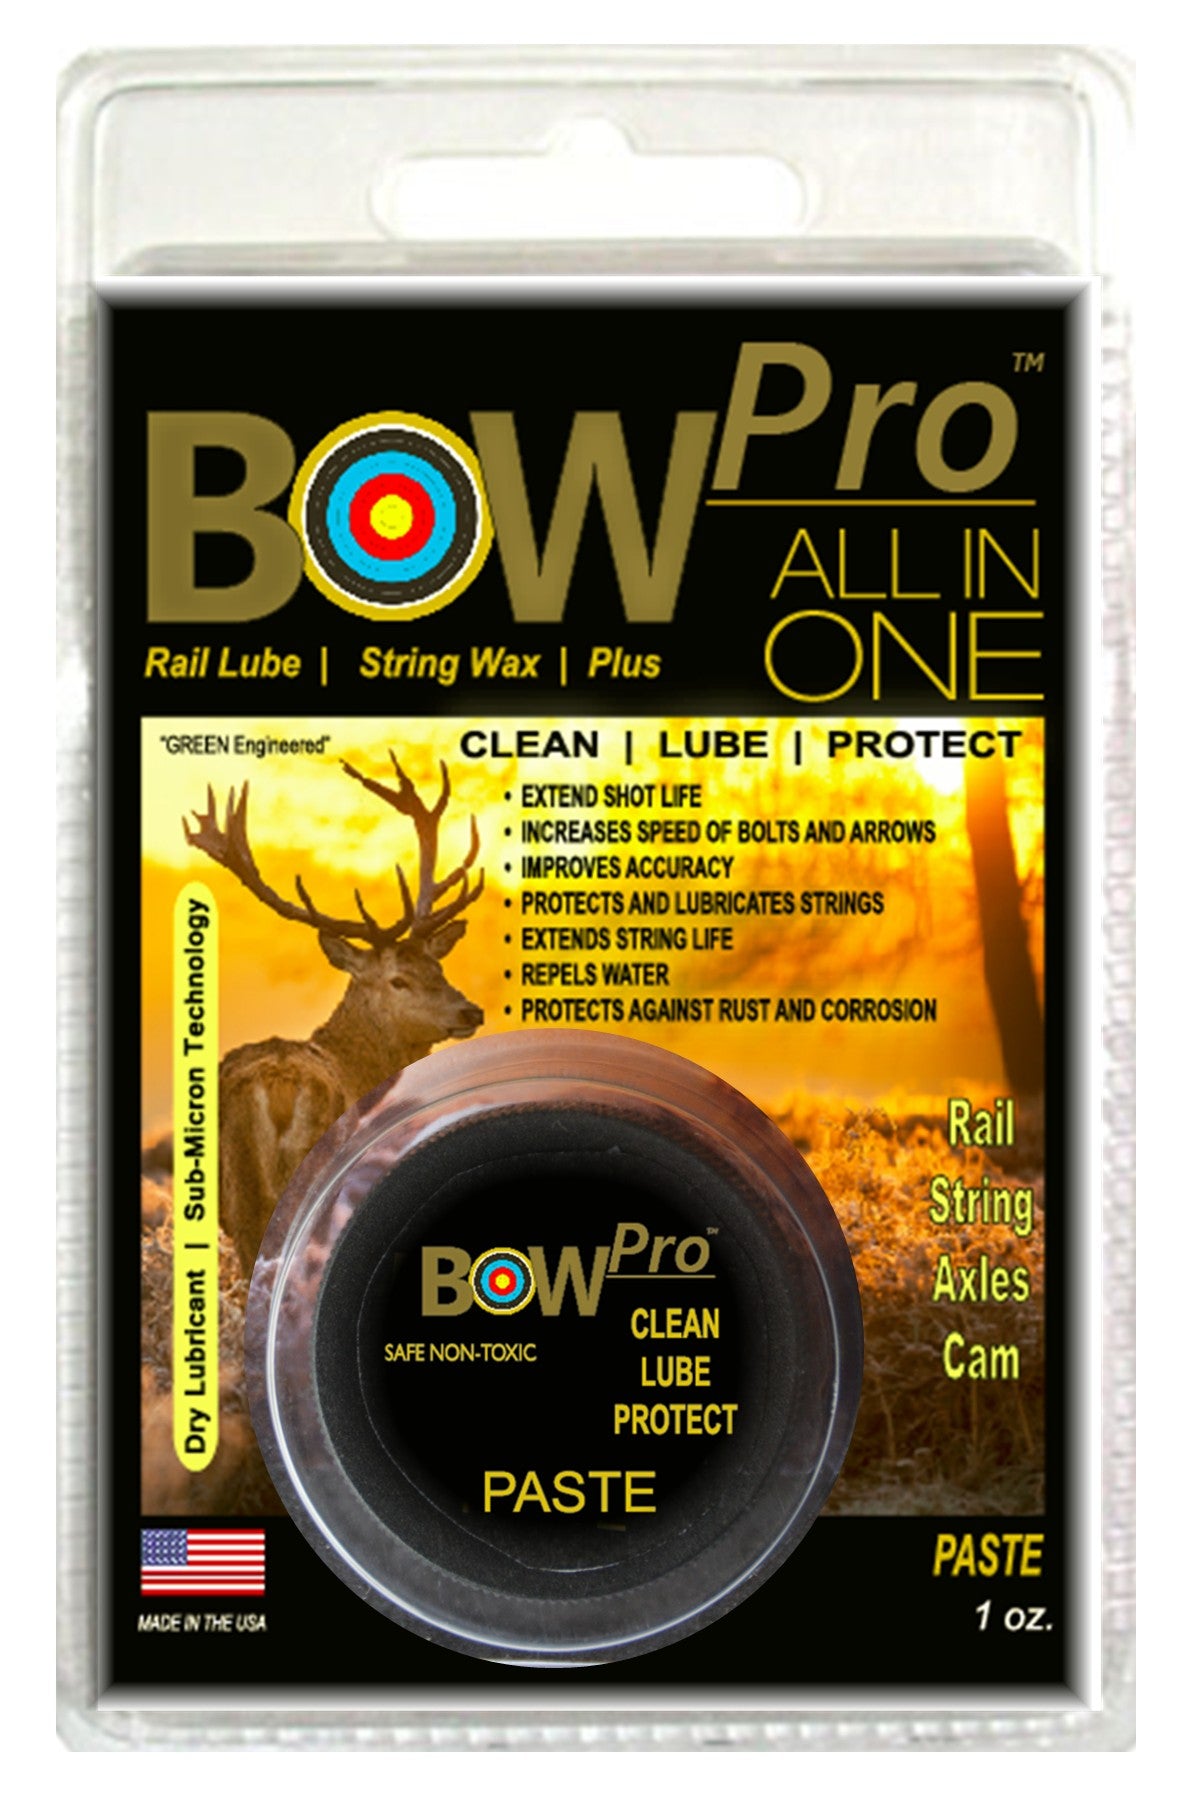 BOW Pro Combination Premium Rail Lube & String Wax 1 oz Jar